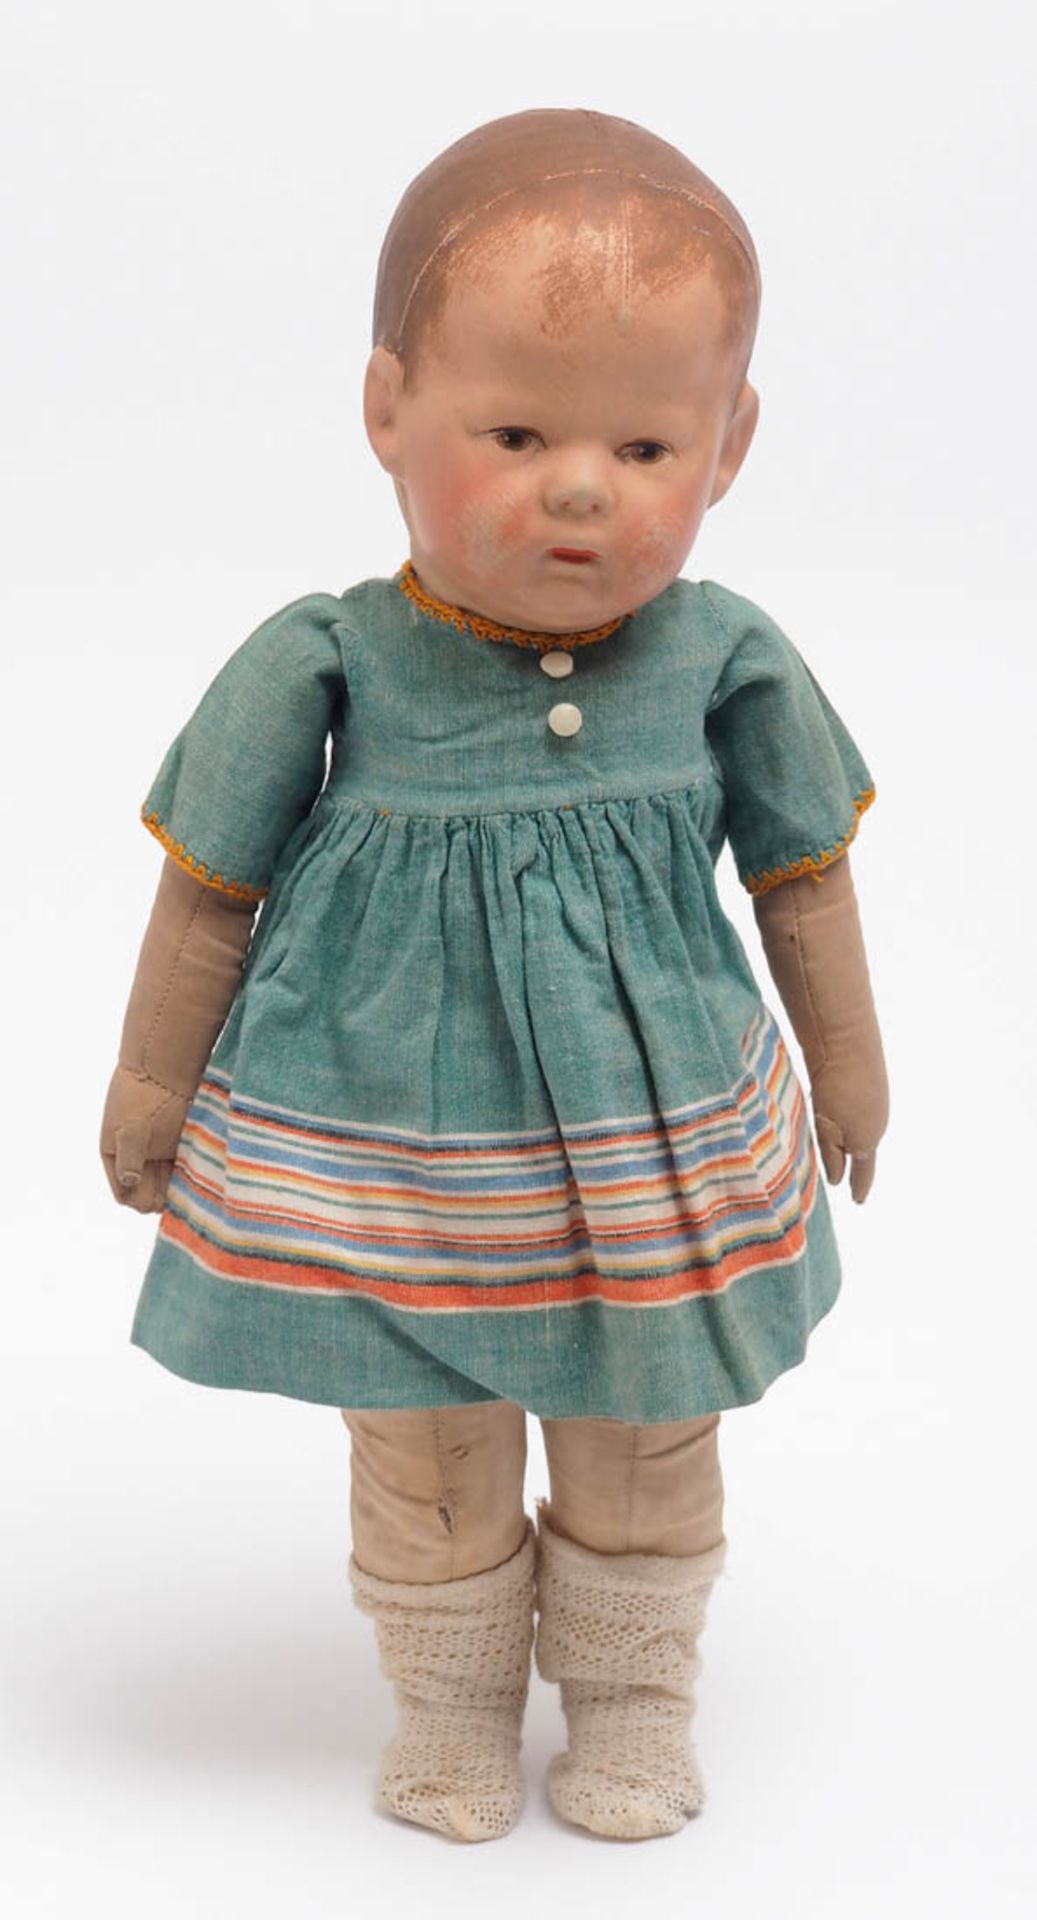 Puppe, Käthe Kruse Kopf (wohl original) mit vier Nähten, Stoffkörper. Originale Bekleidung.